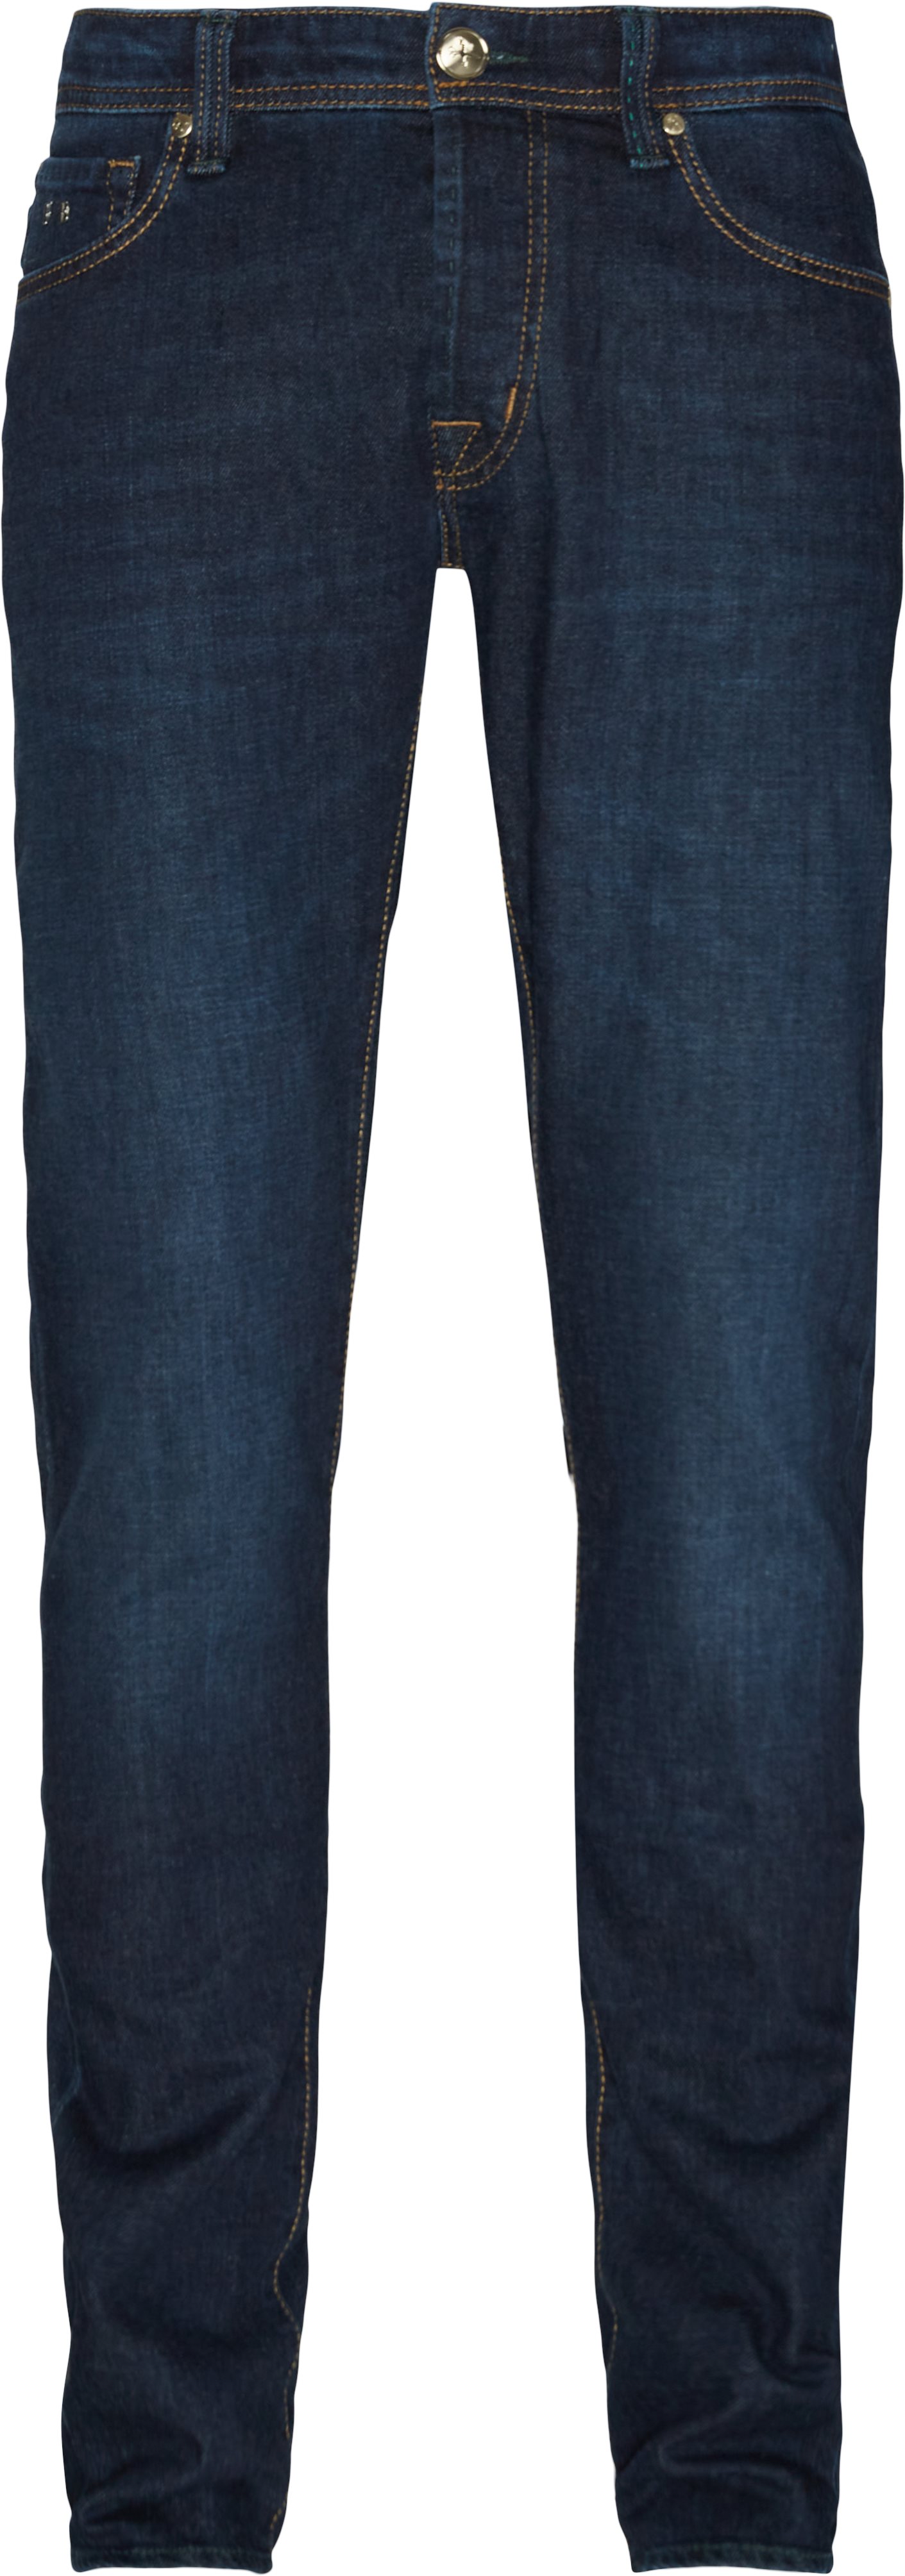 Leonardo Jeans - Jeans - Slim fit - Blå